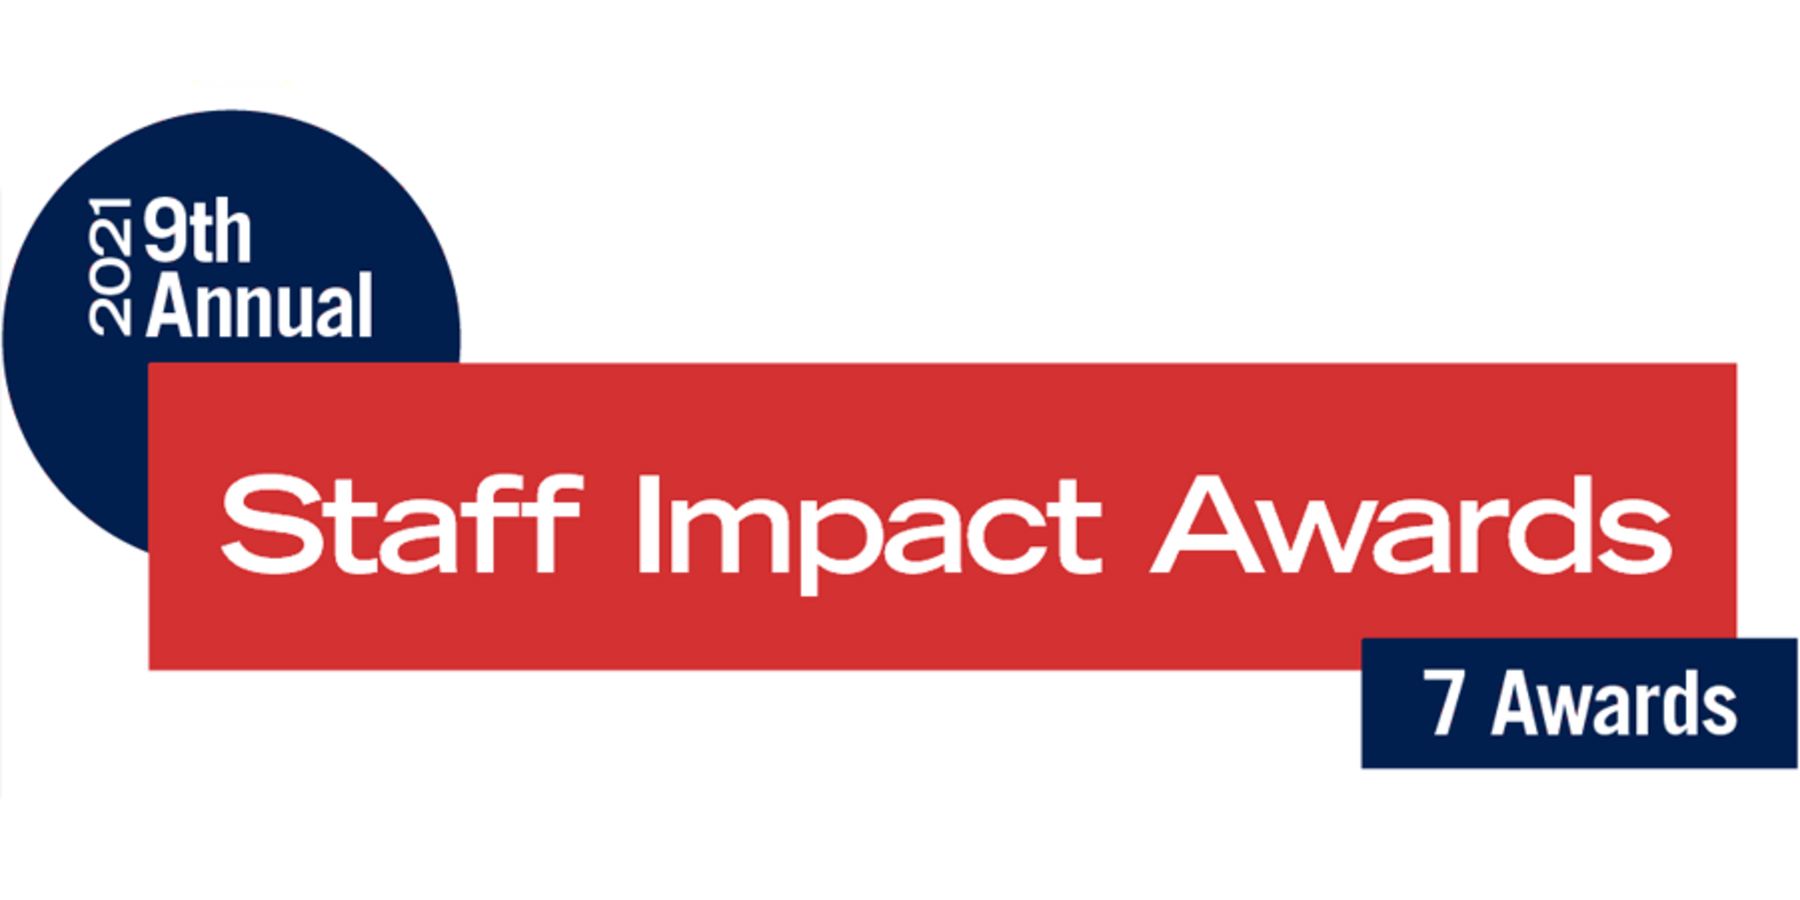 2021 9th Annual Staff Impact Awards (7 Awards)